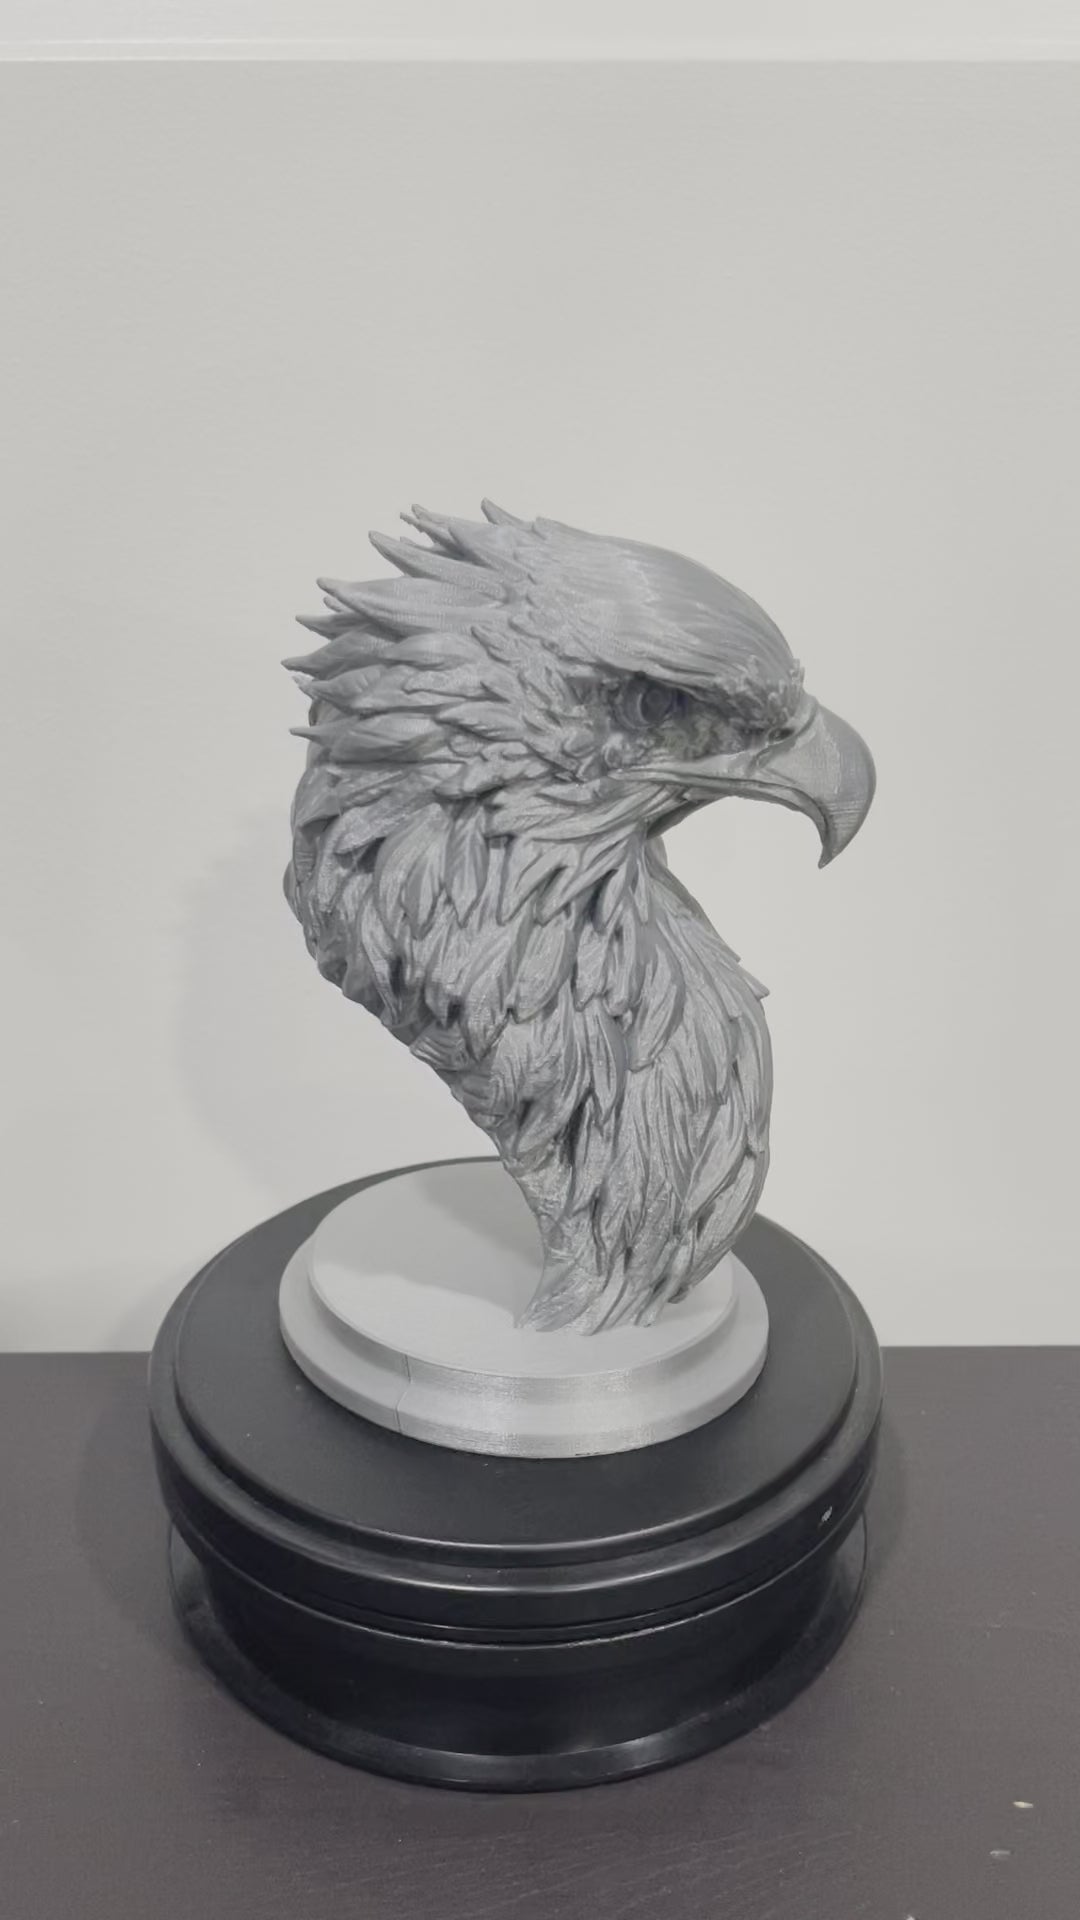 American Bald Eagle Statue, Patriotic Sculpture, USA Symbol, American Pride Decor